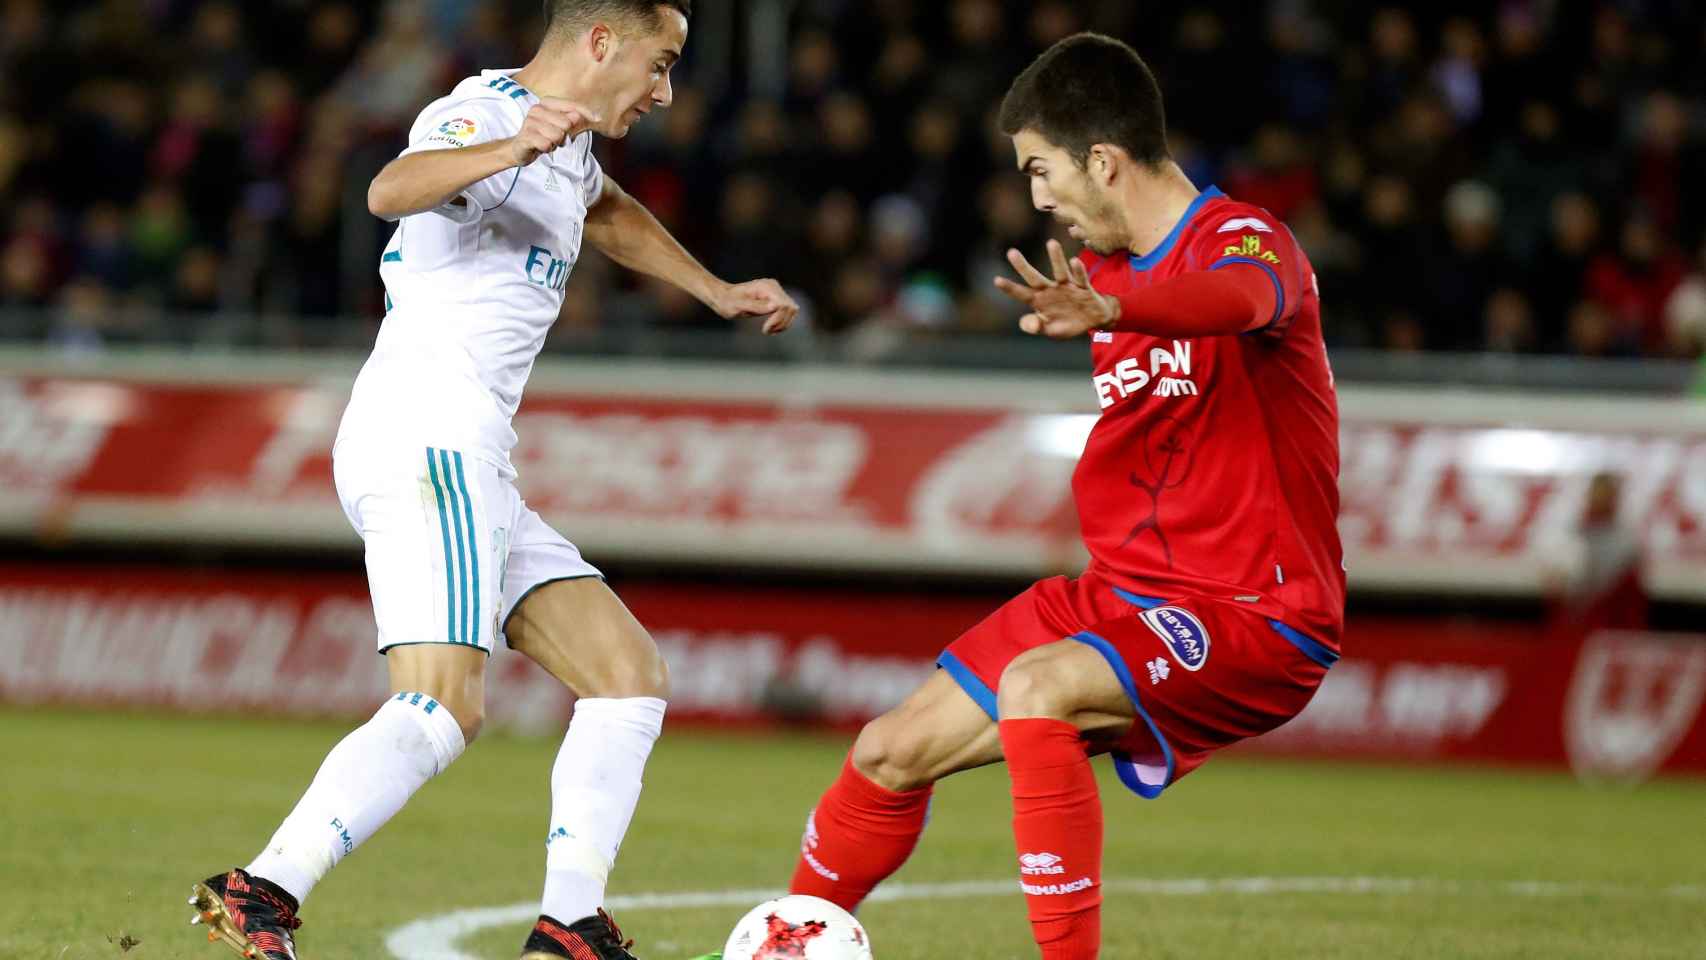 Lucas Vázquez provocó los dos penaltis a favor del Real Madrid en Soria.